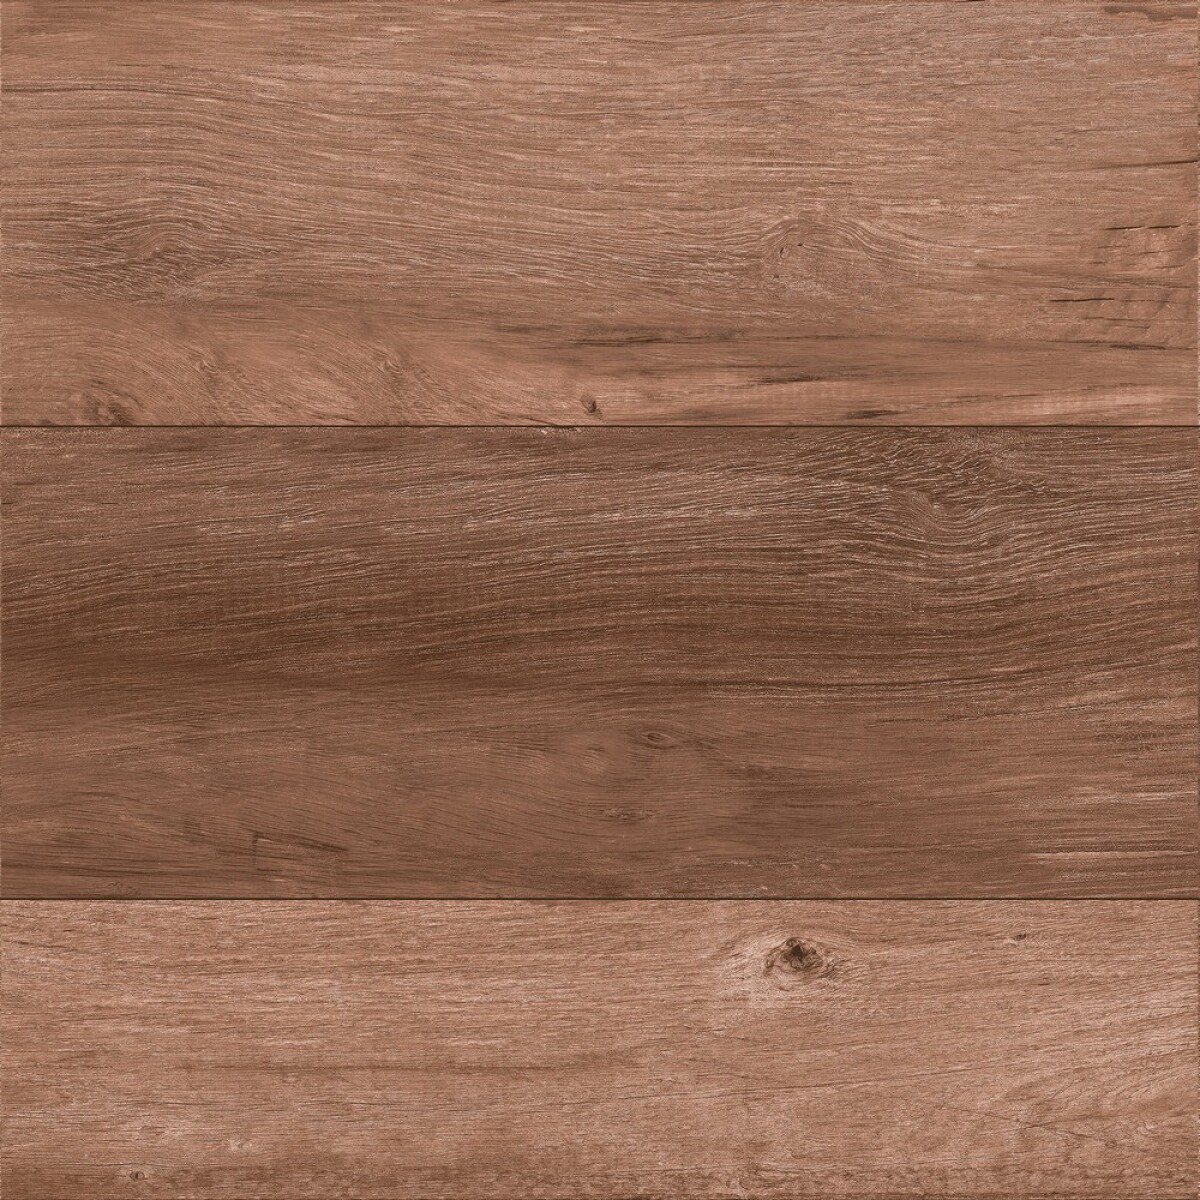 Cerámica New legno linear - 2.52m2 